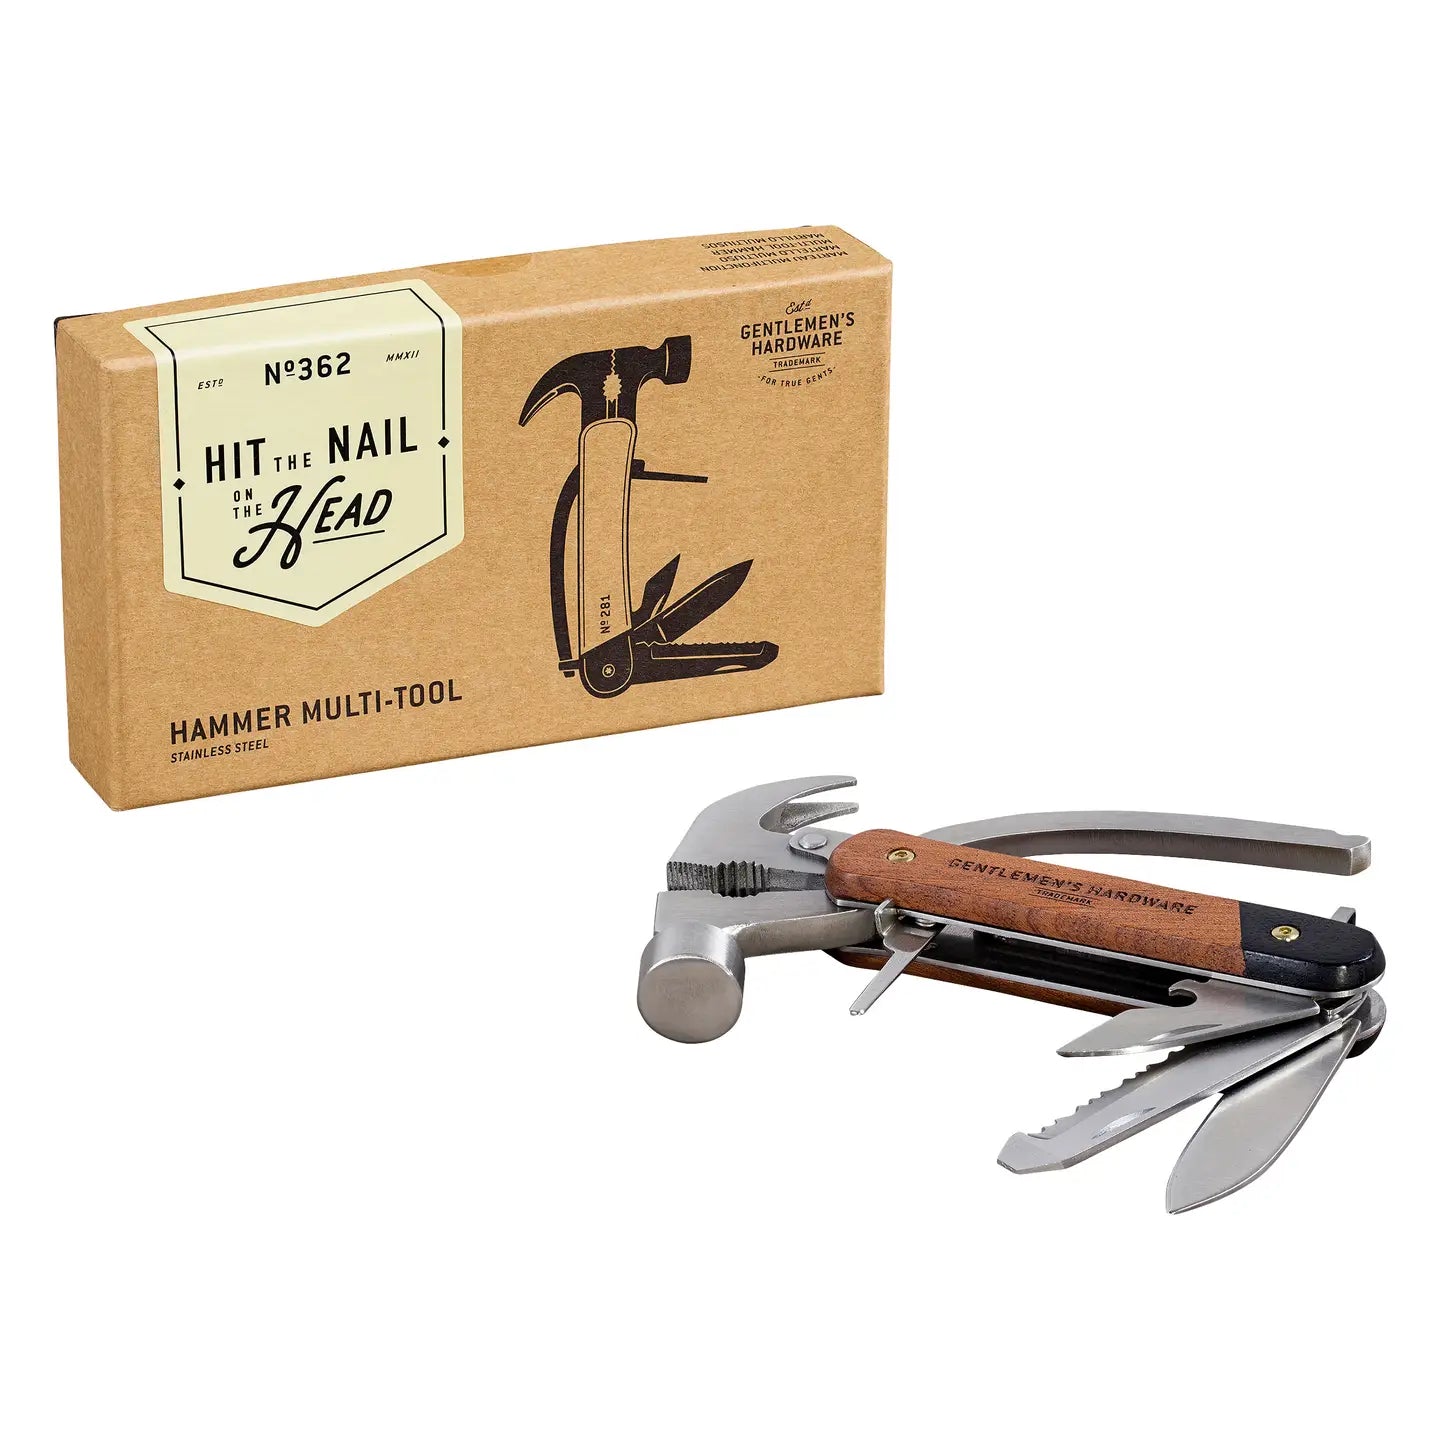 Gentleman's Hardware - Wood Hammer Multi-tool